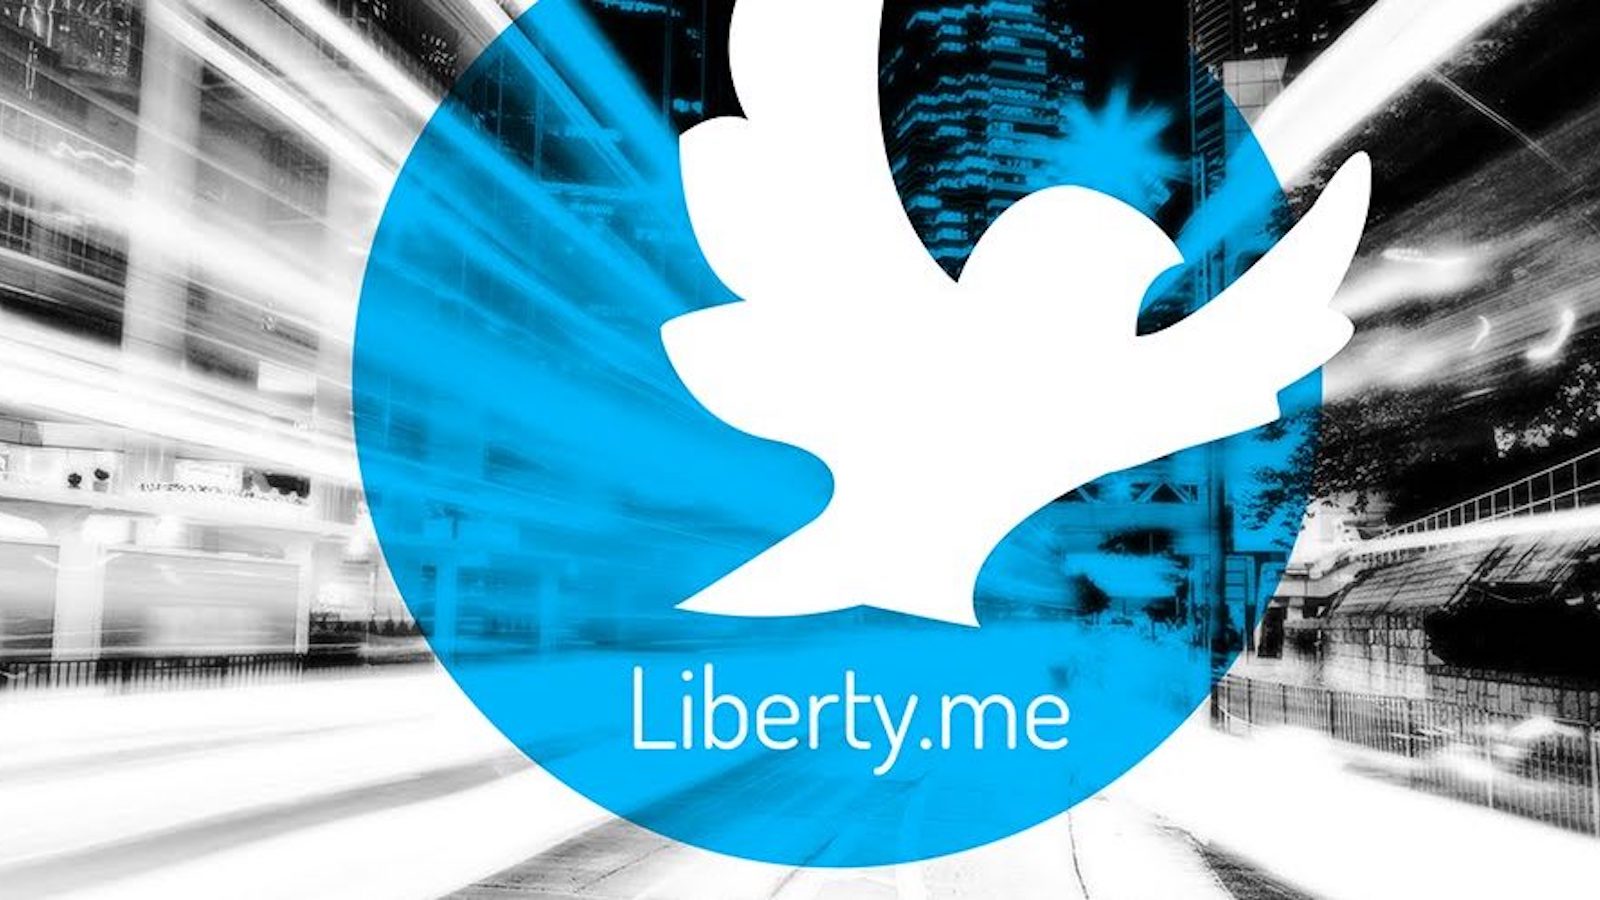 Liberty.me - Free the People